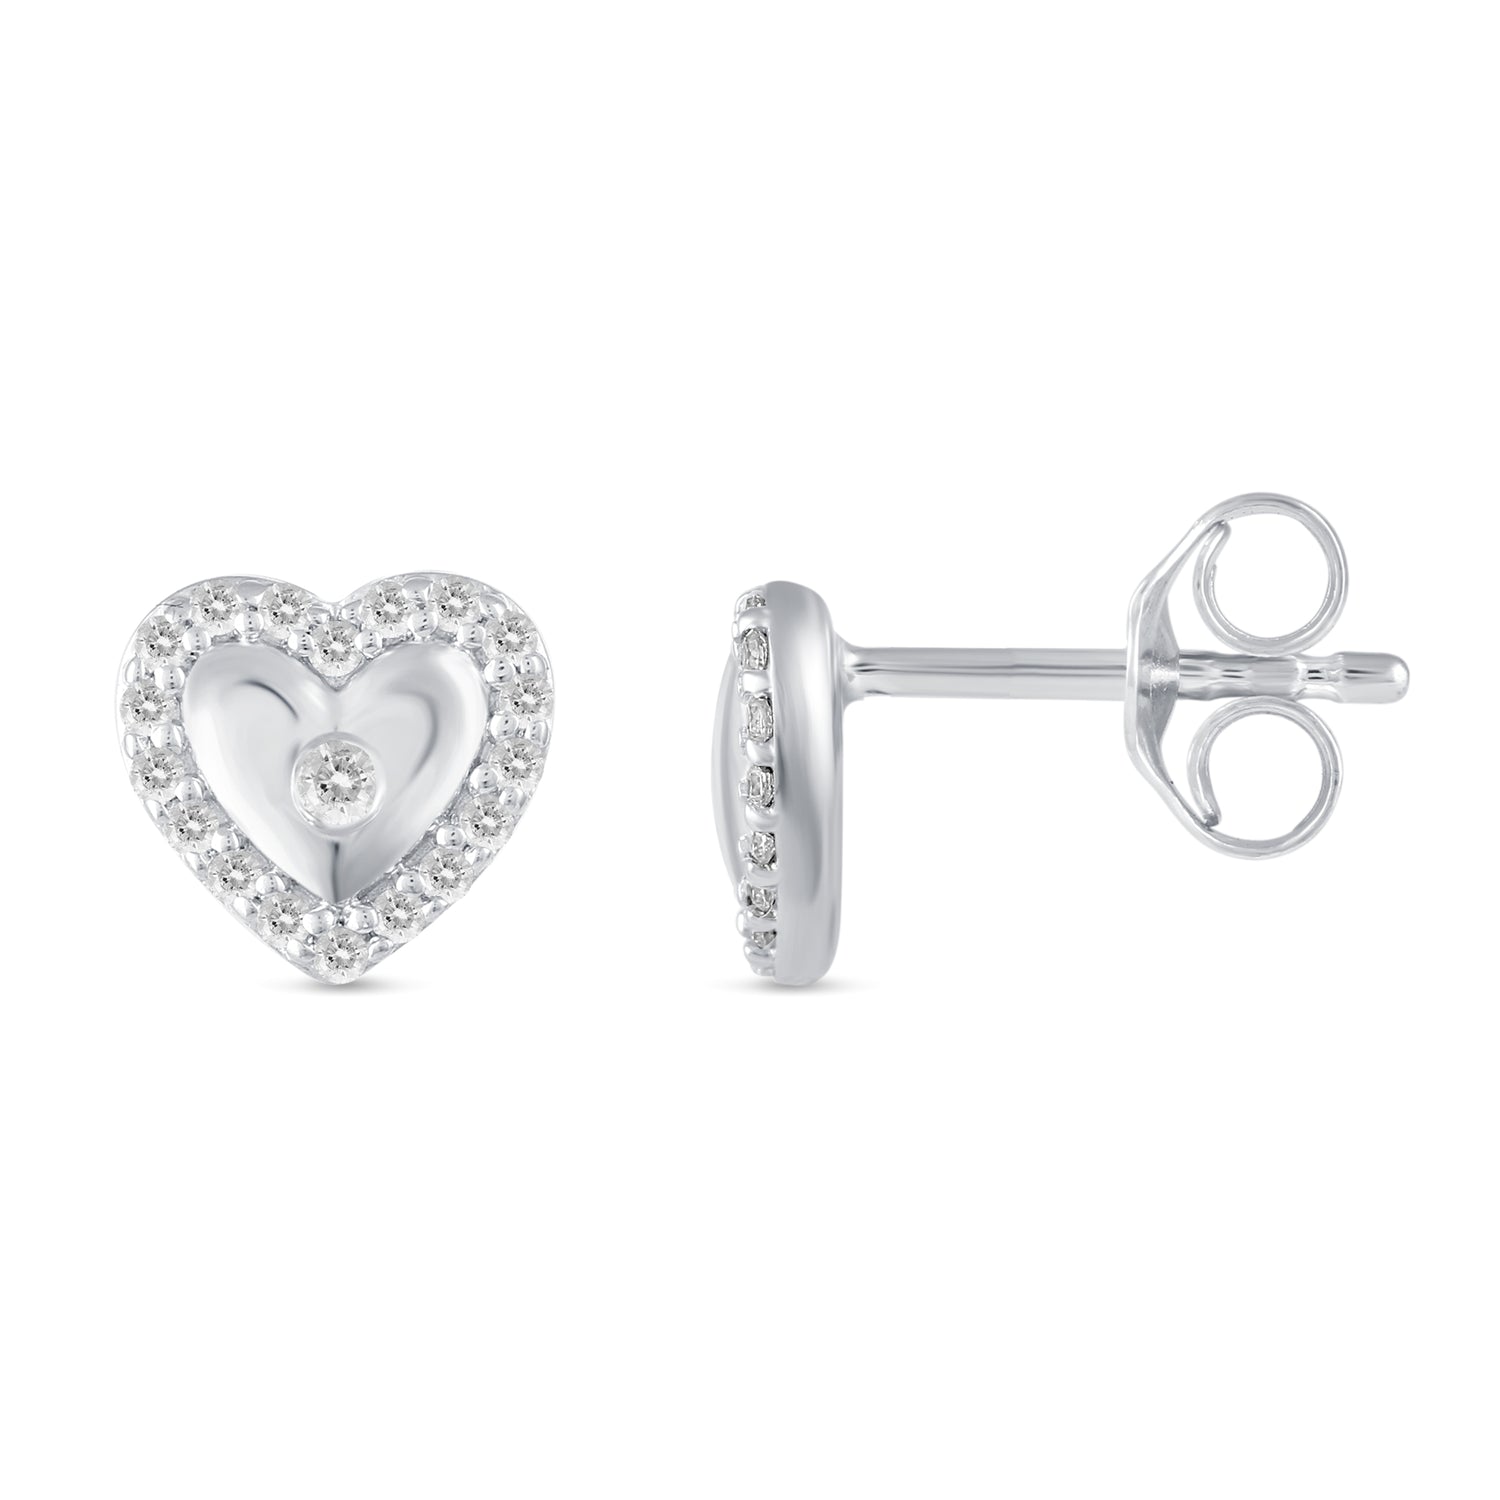 Set of 2 : 3/8 CT TW Diamond Puff Halo Heart Pendant & Earrings in 925 Sterling Silver